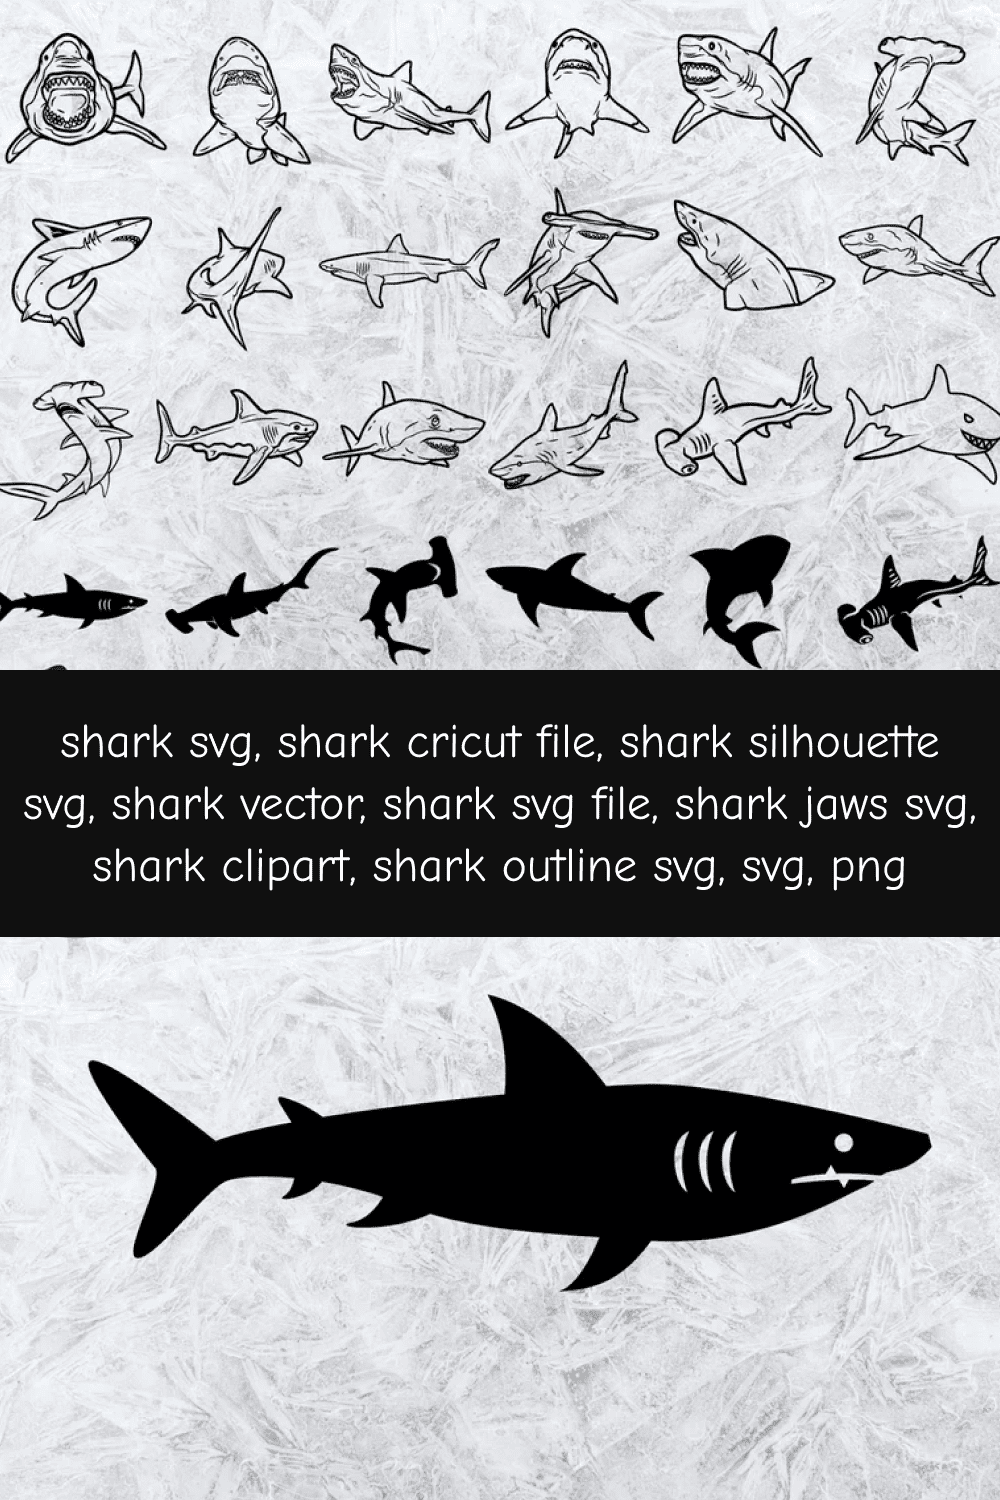 Shark Silhouette SVG.